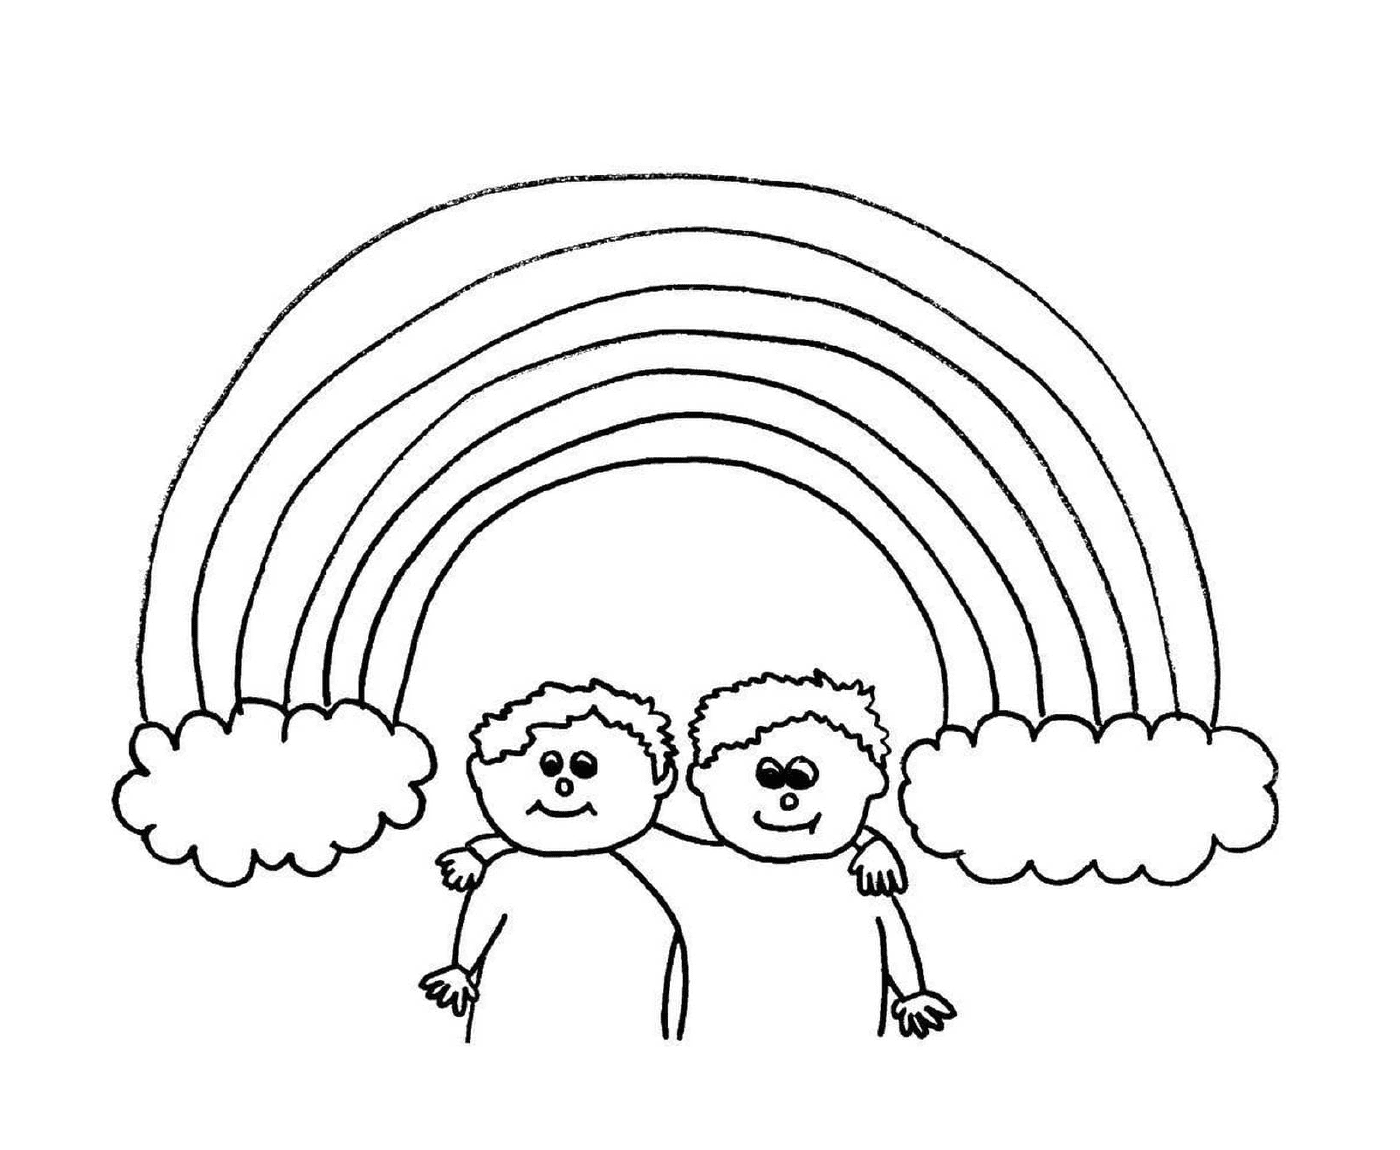   Deux garçons devant un arc-en-ciel 